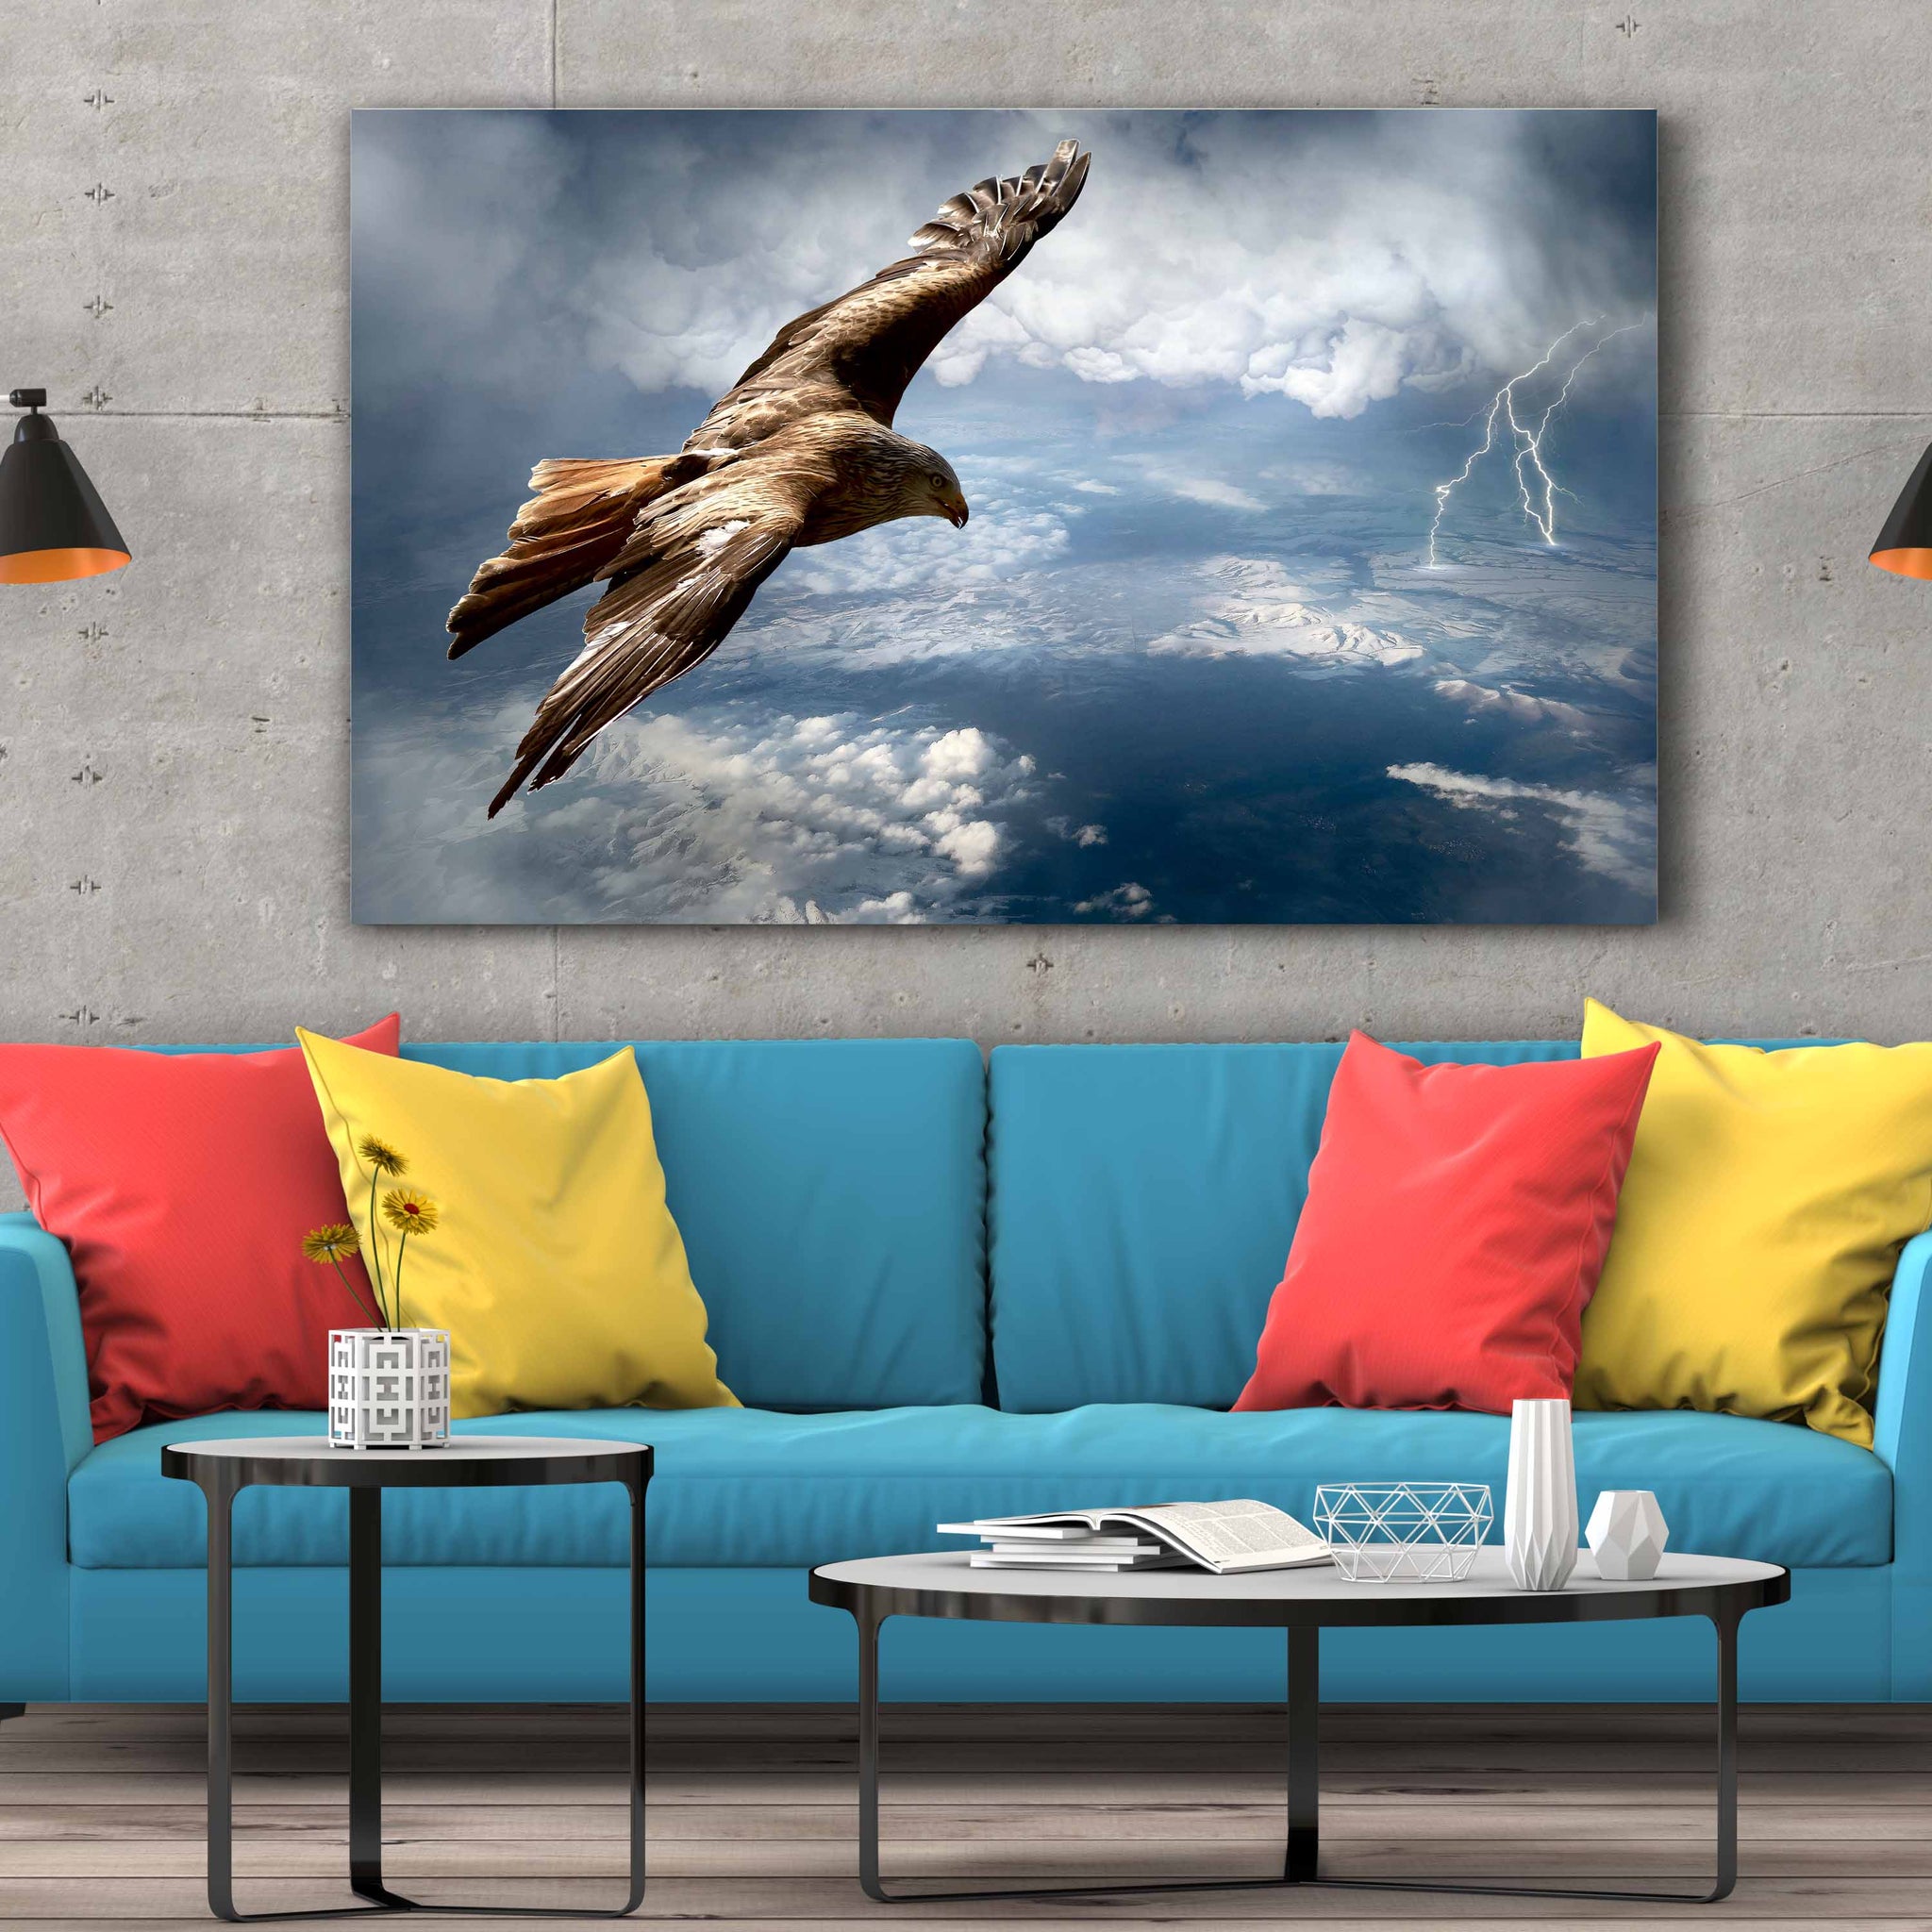 Tablou Canvas Vultur Deasupra Furtunii